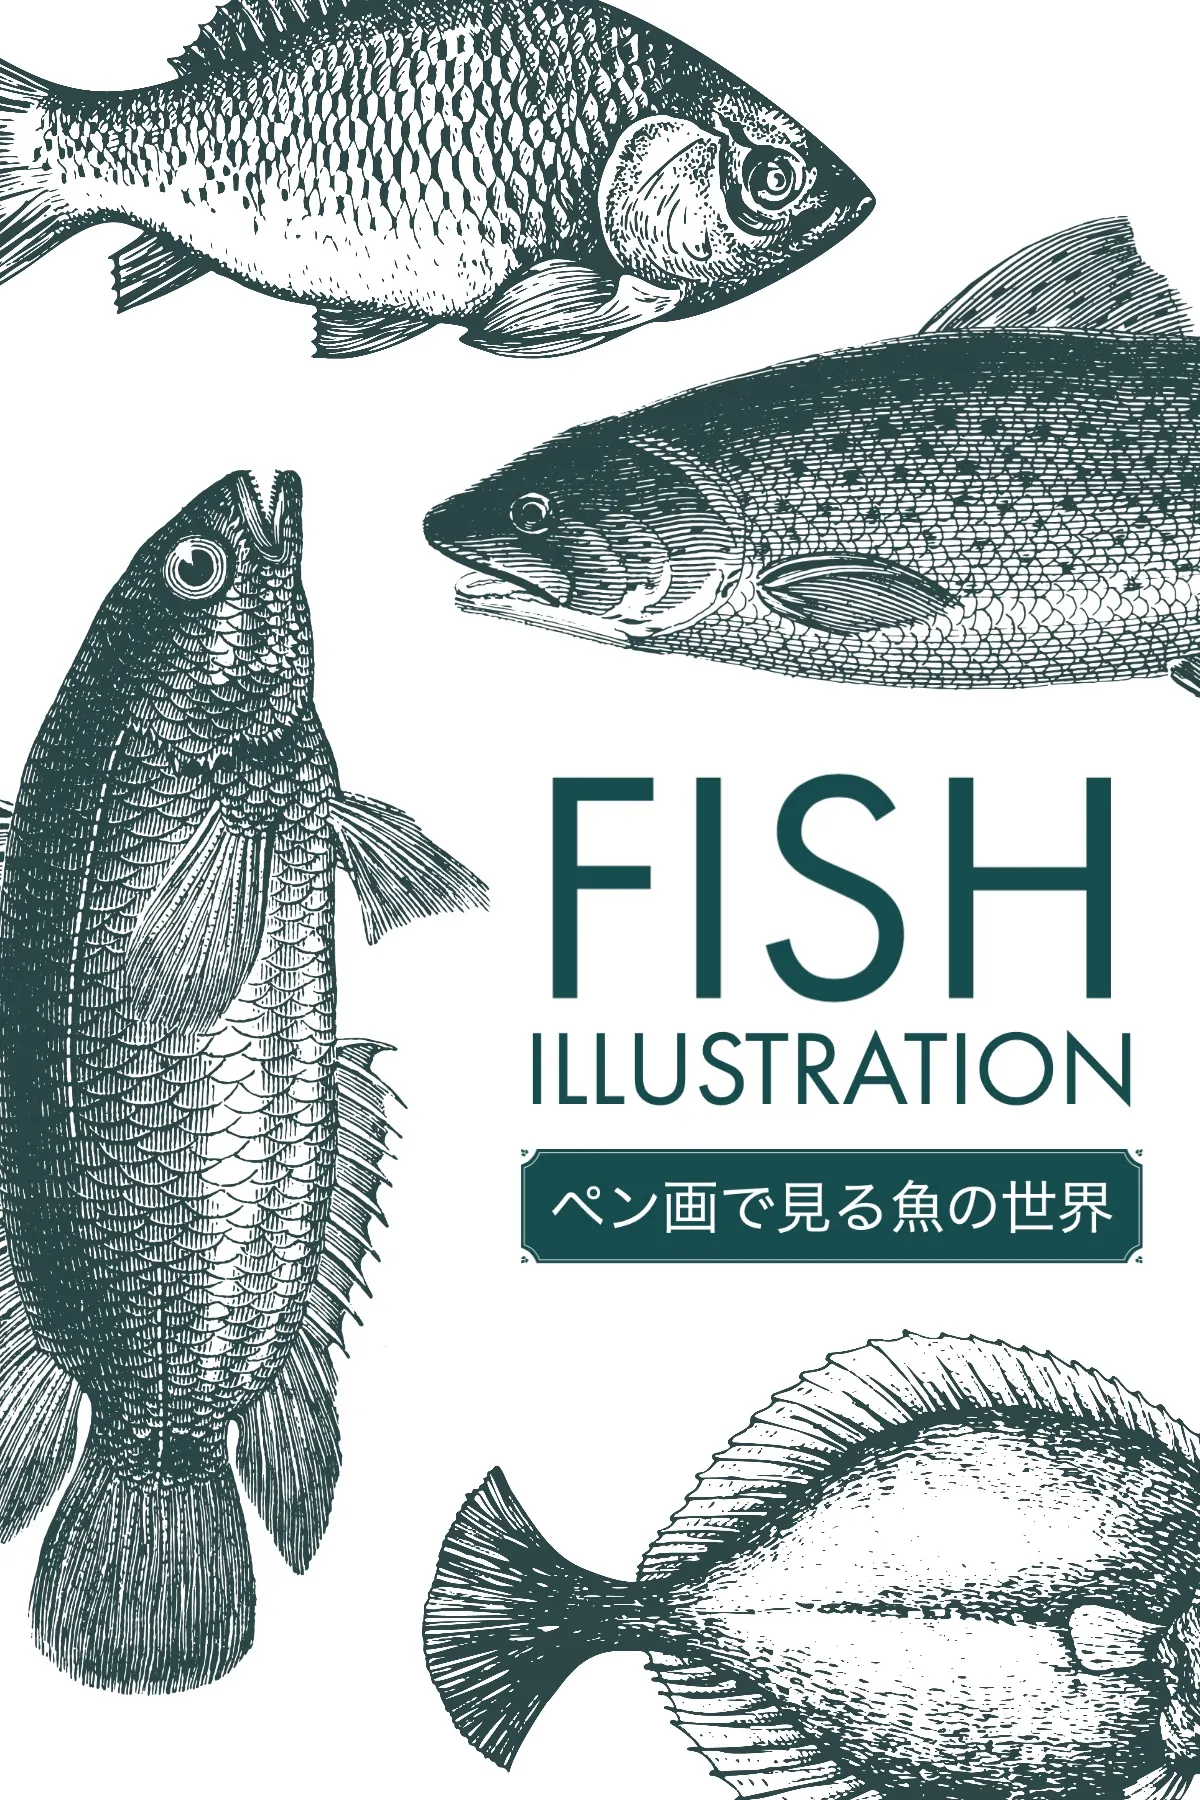 Fish illustration pinterest graphic